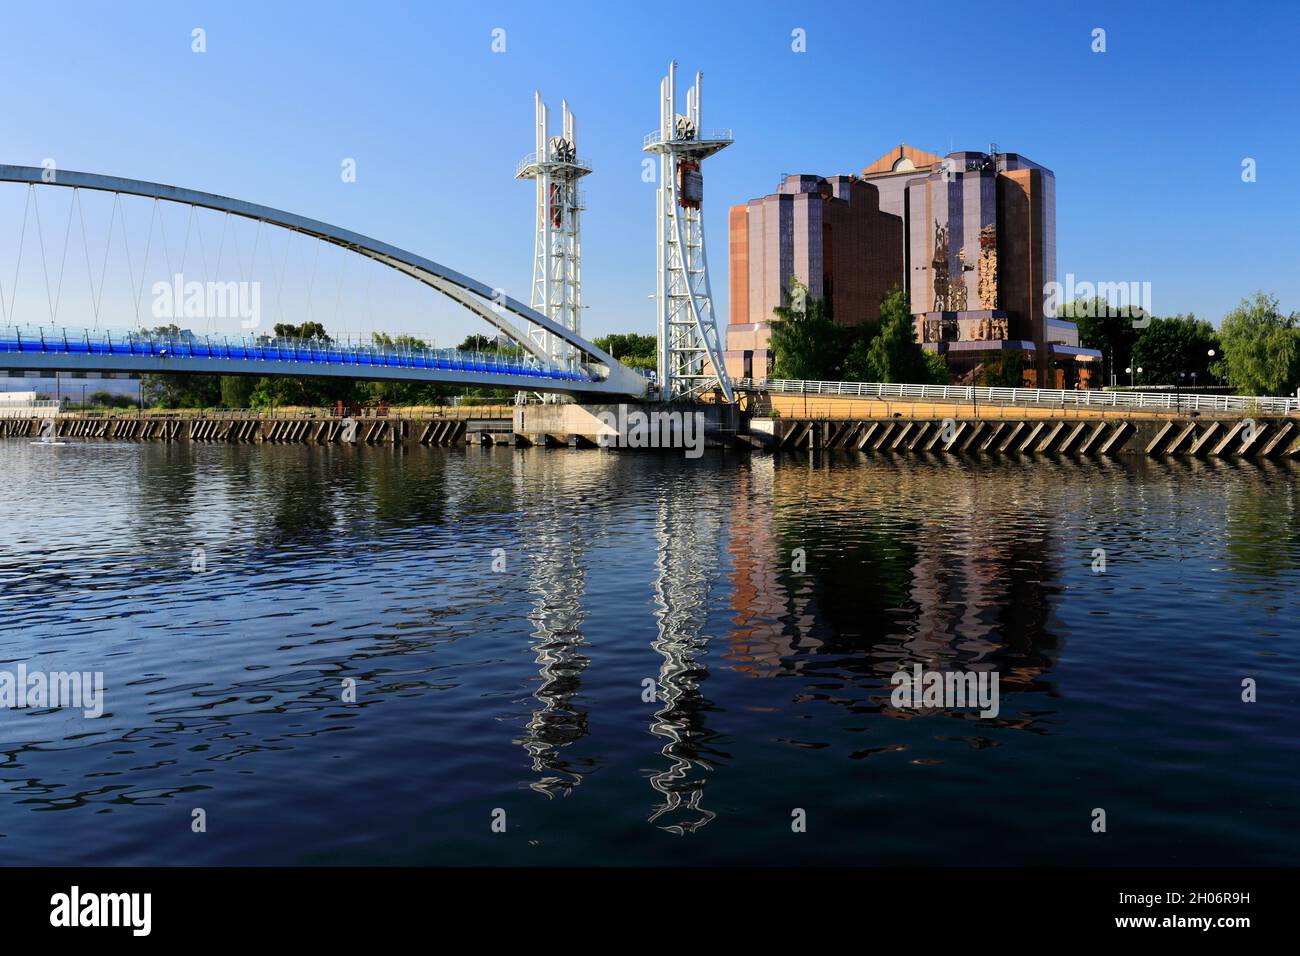 The Quay West building and Millennium Bridge, Trafford Wharf, Manchester, Lancashire, England Stock Photo